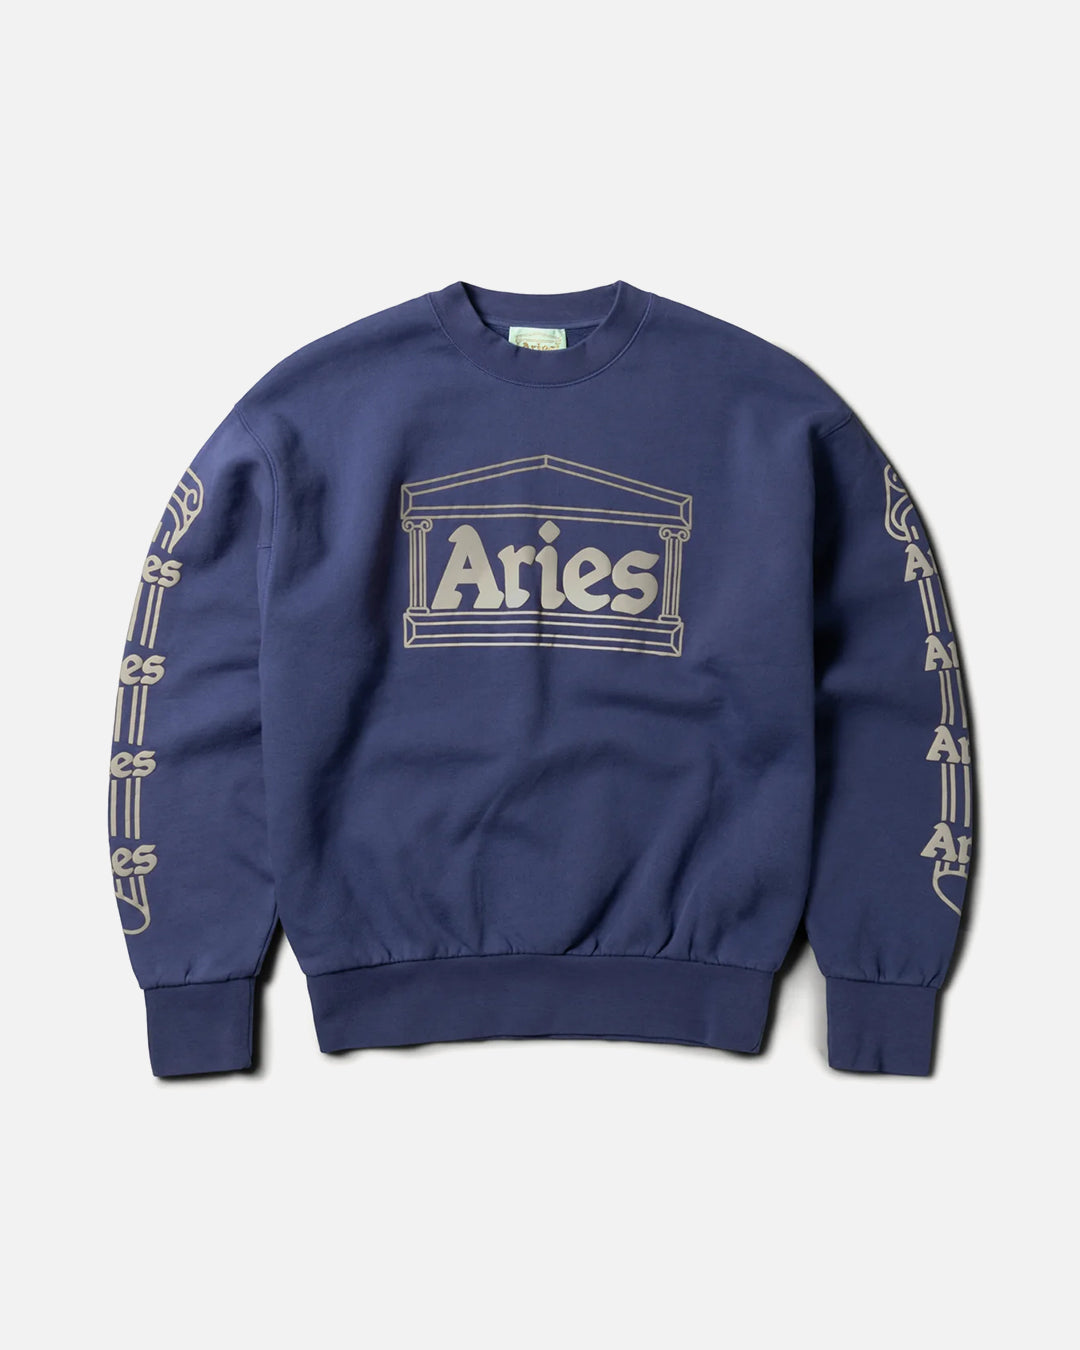 Aries Arise Reflective Column Sweatshirt in Navy